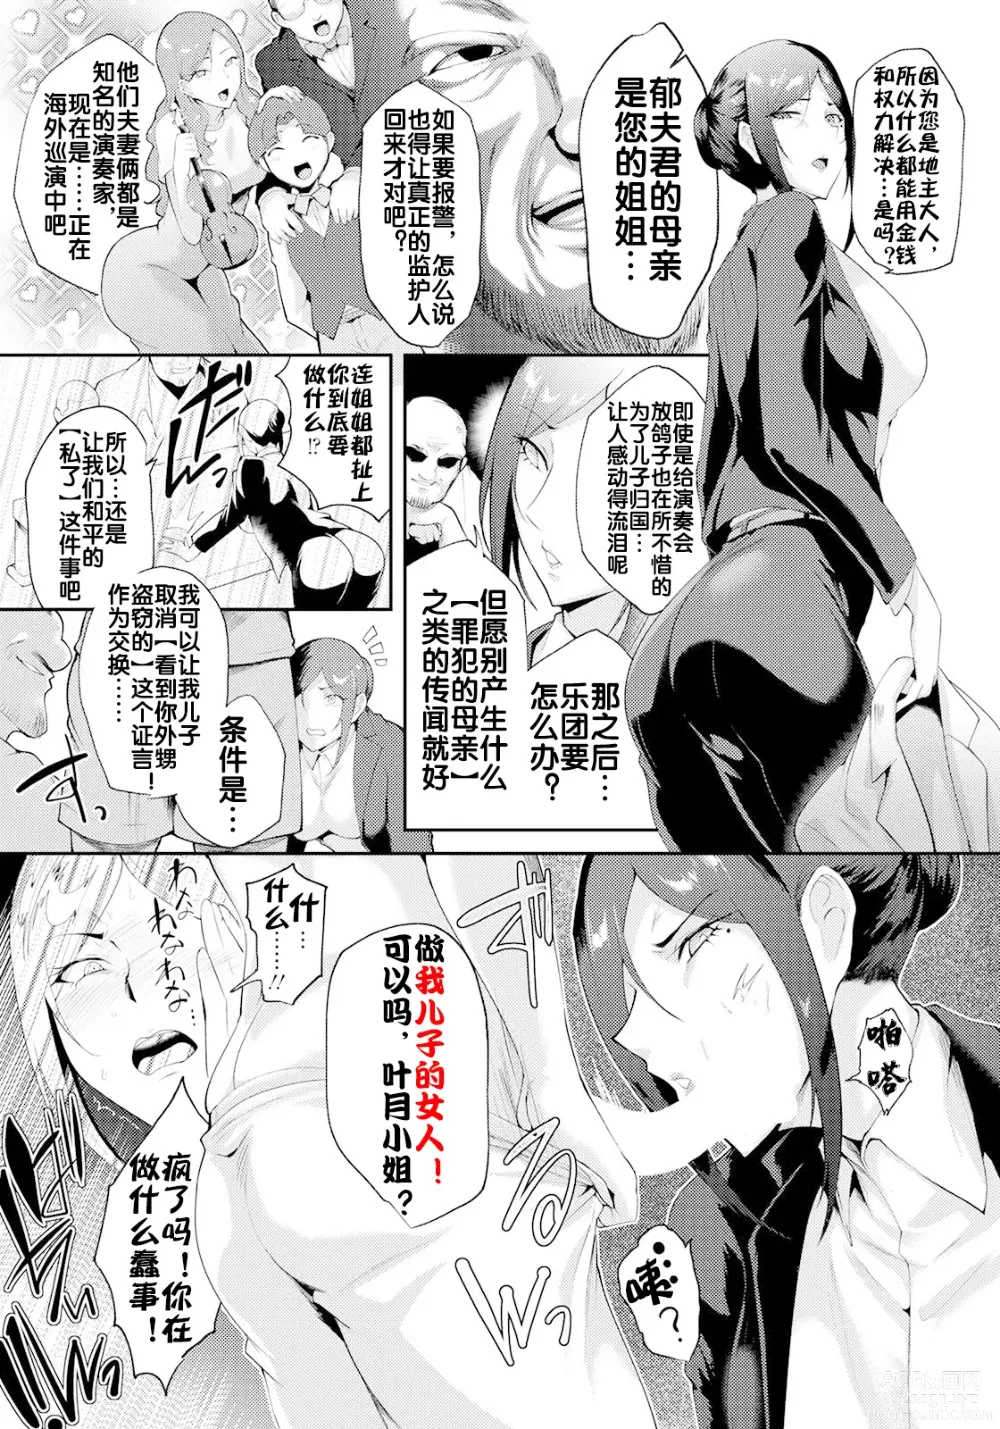 Page 7 of manga Saobakari